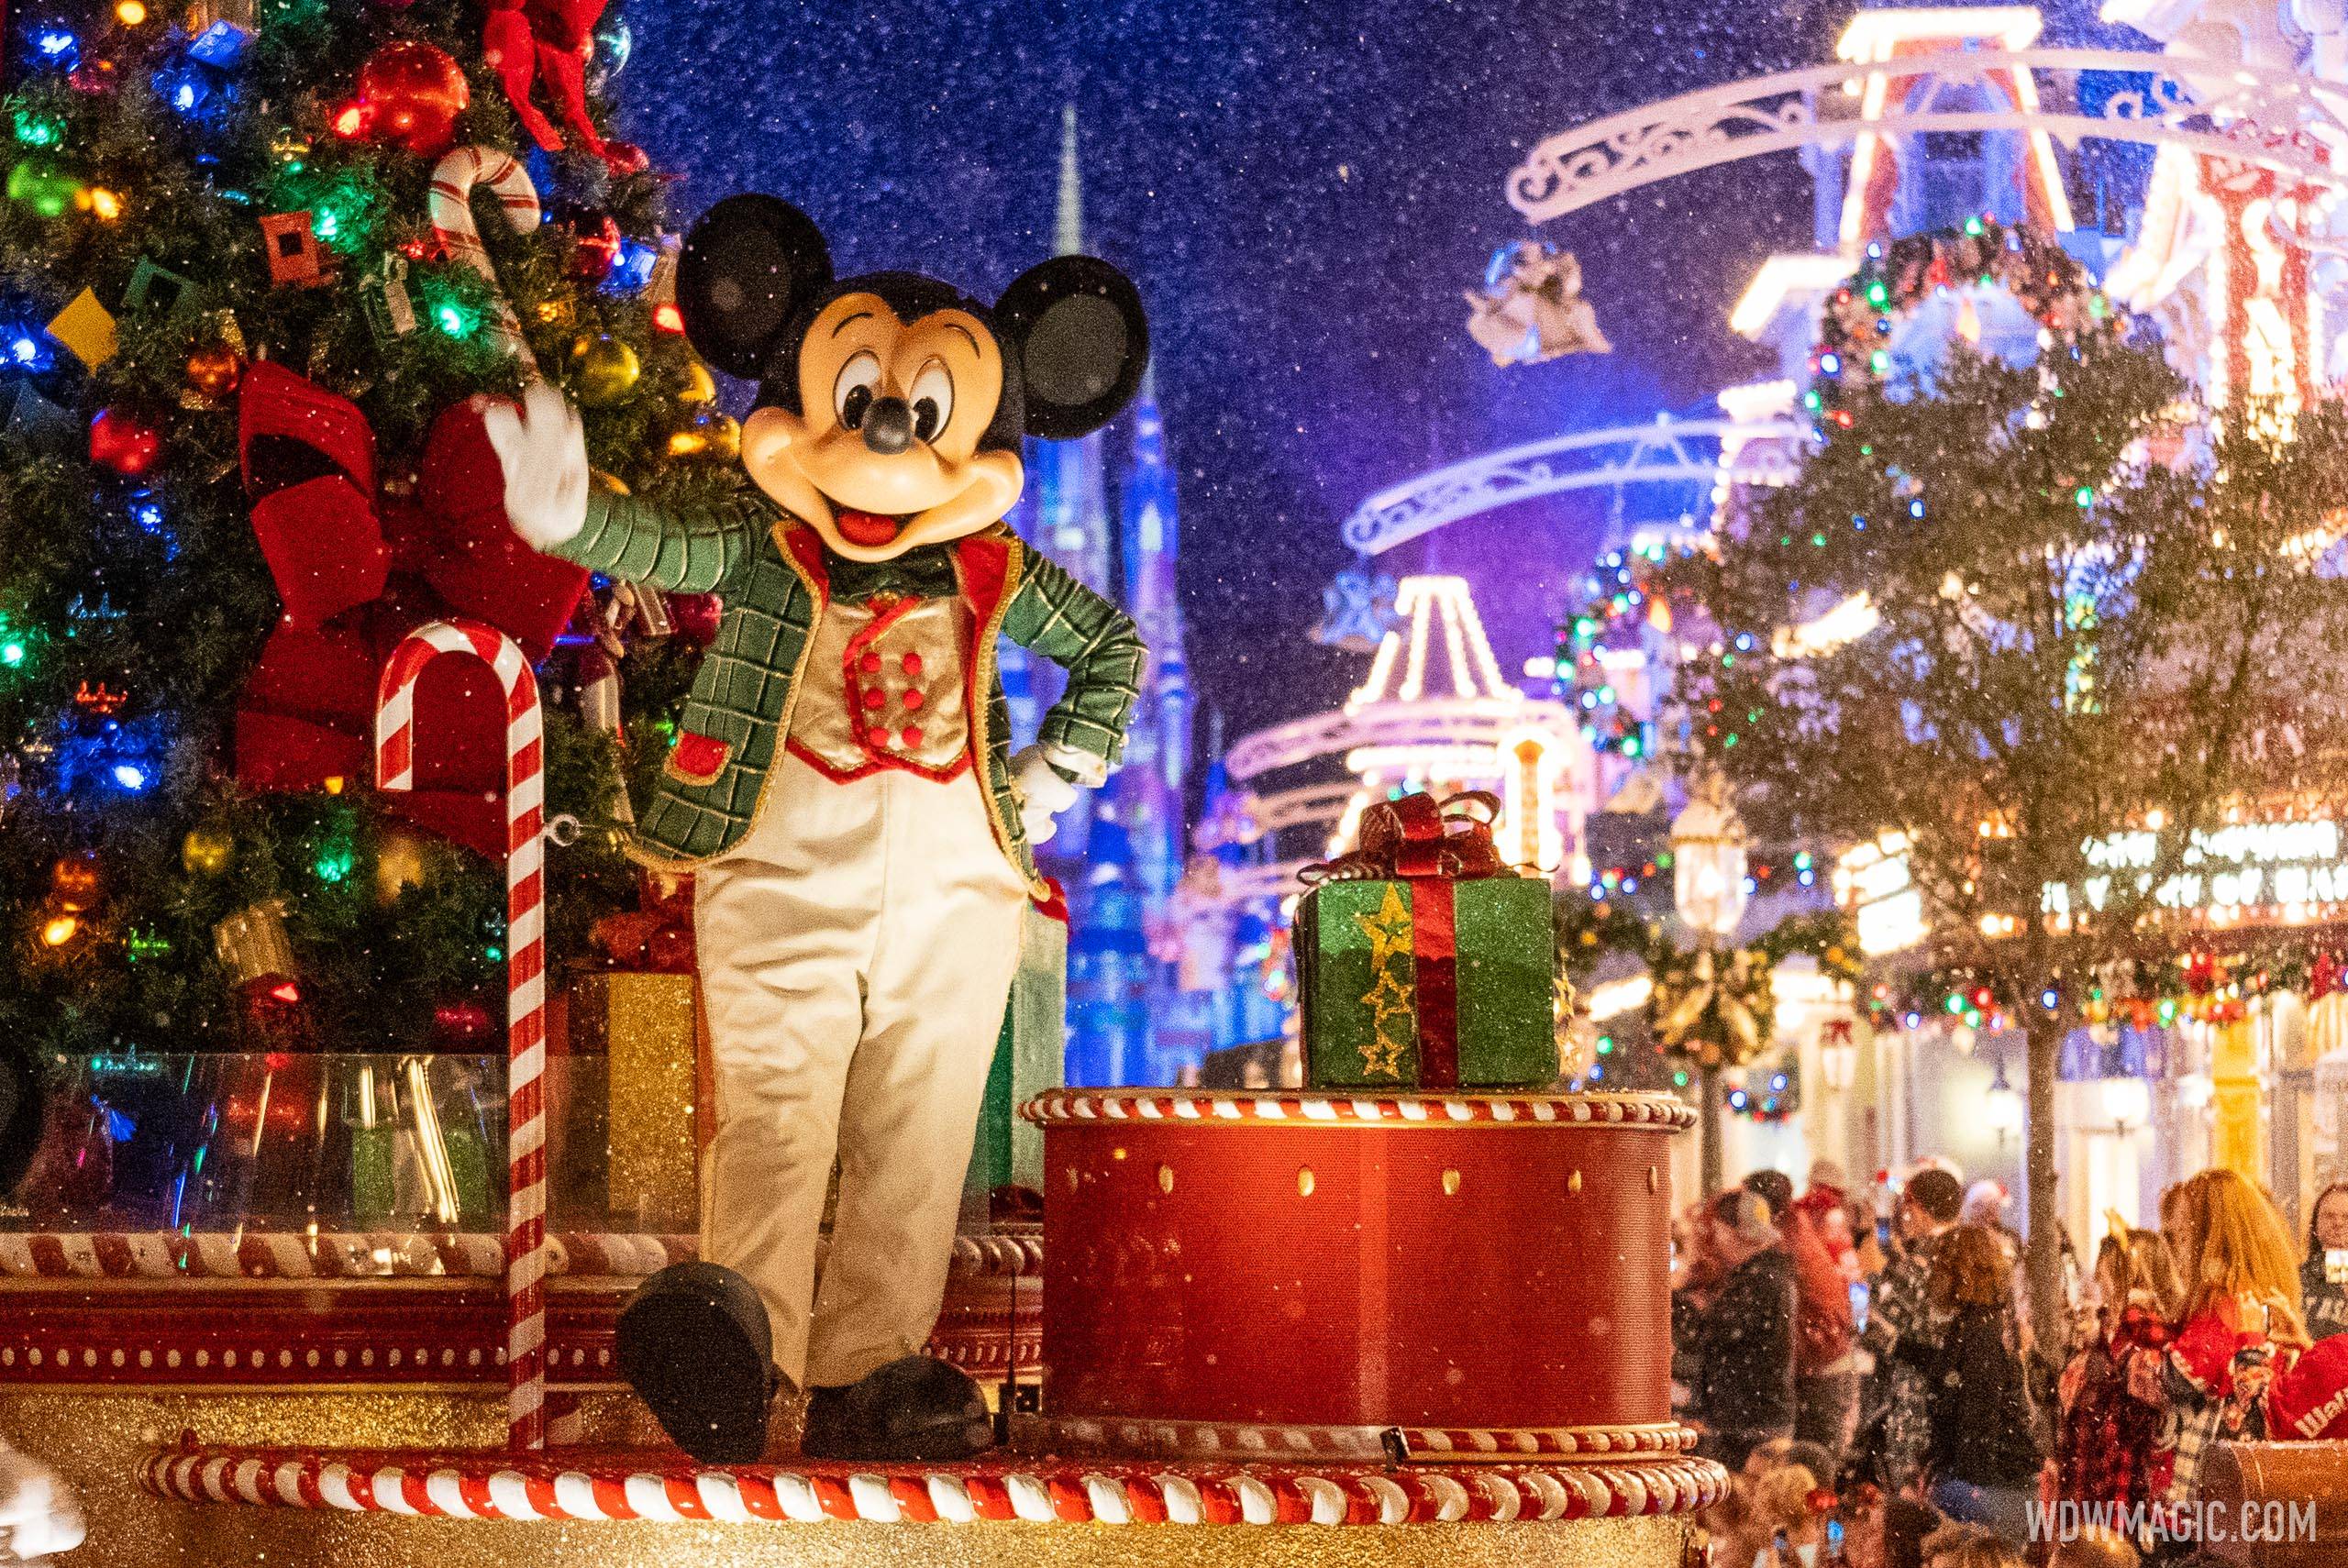 Magic Kingdom's 'Mickey's Once Upon a Christmastime Parade' joins Disney Genie+ Lighting Lane 